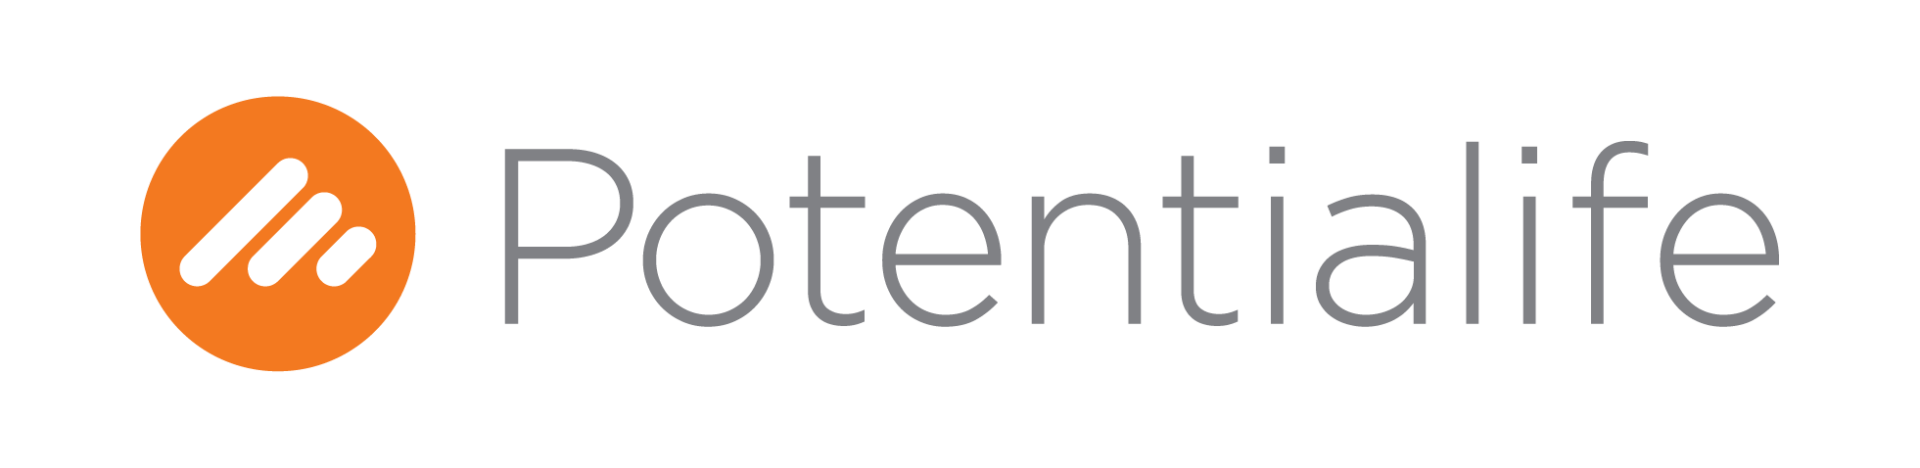 potentialife logo key